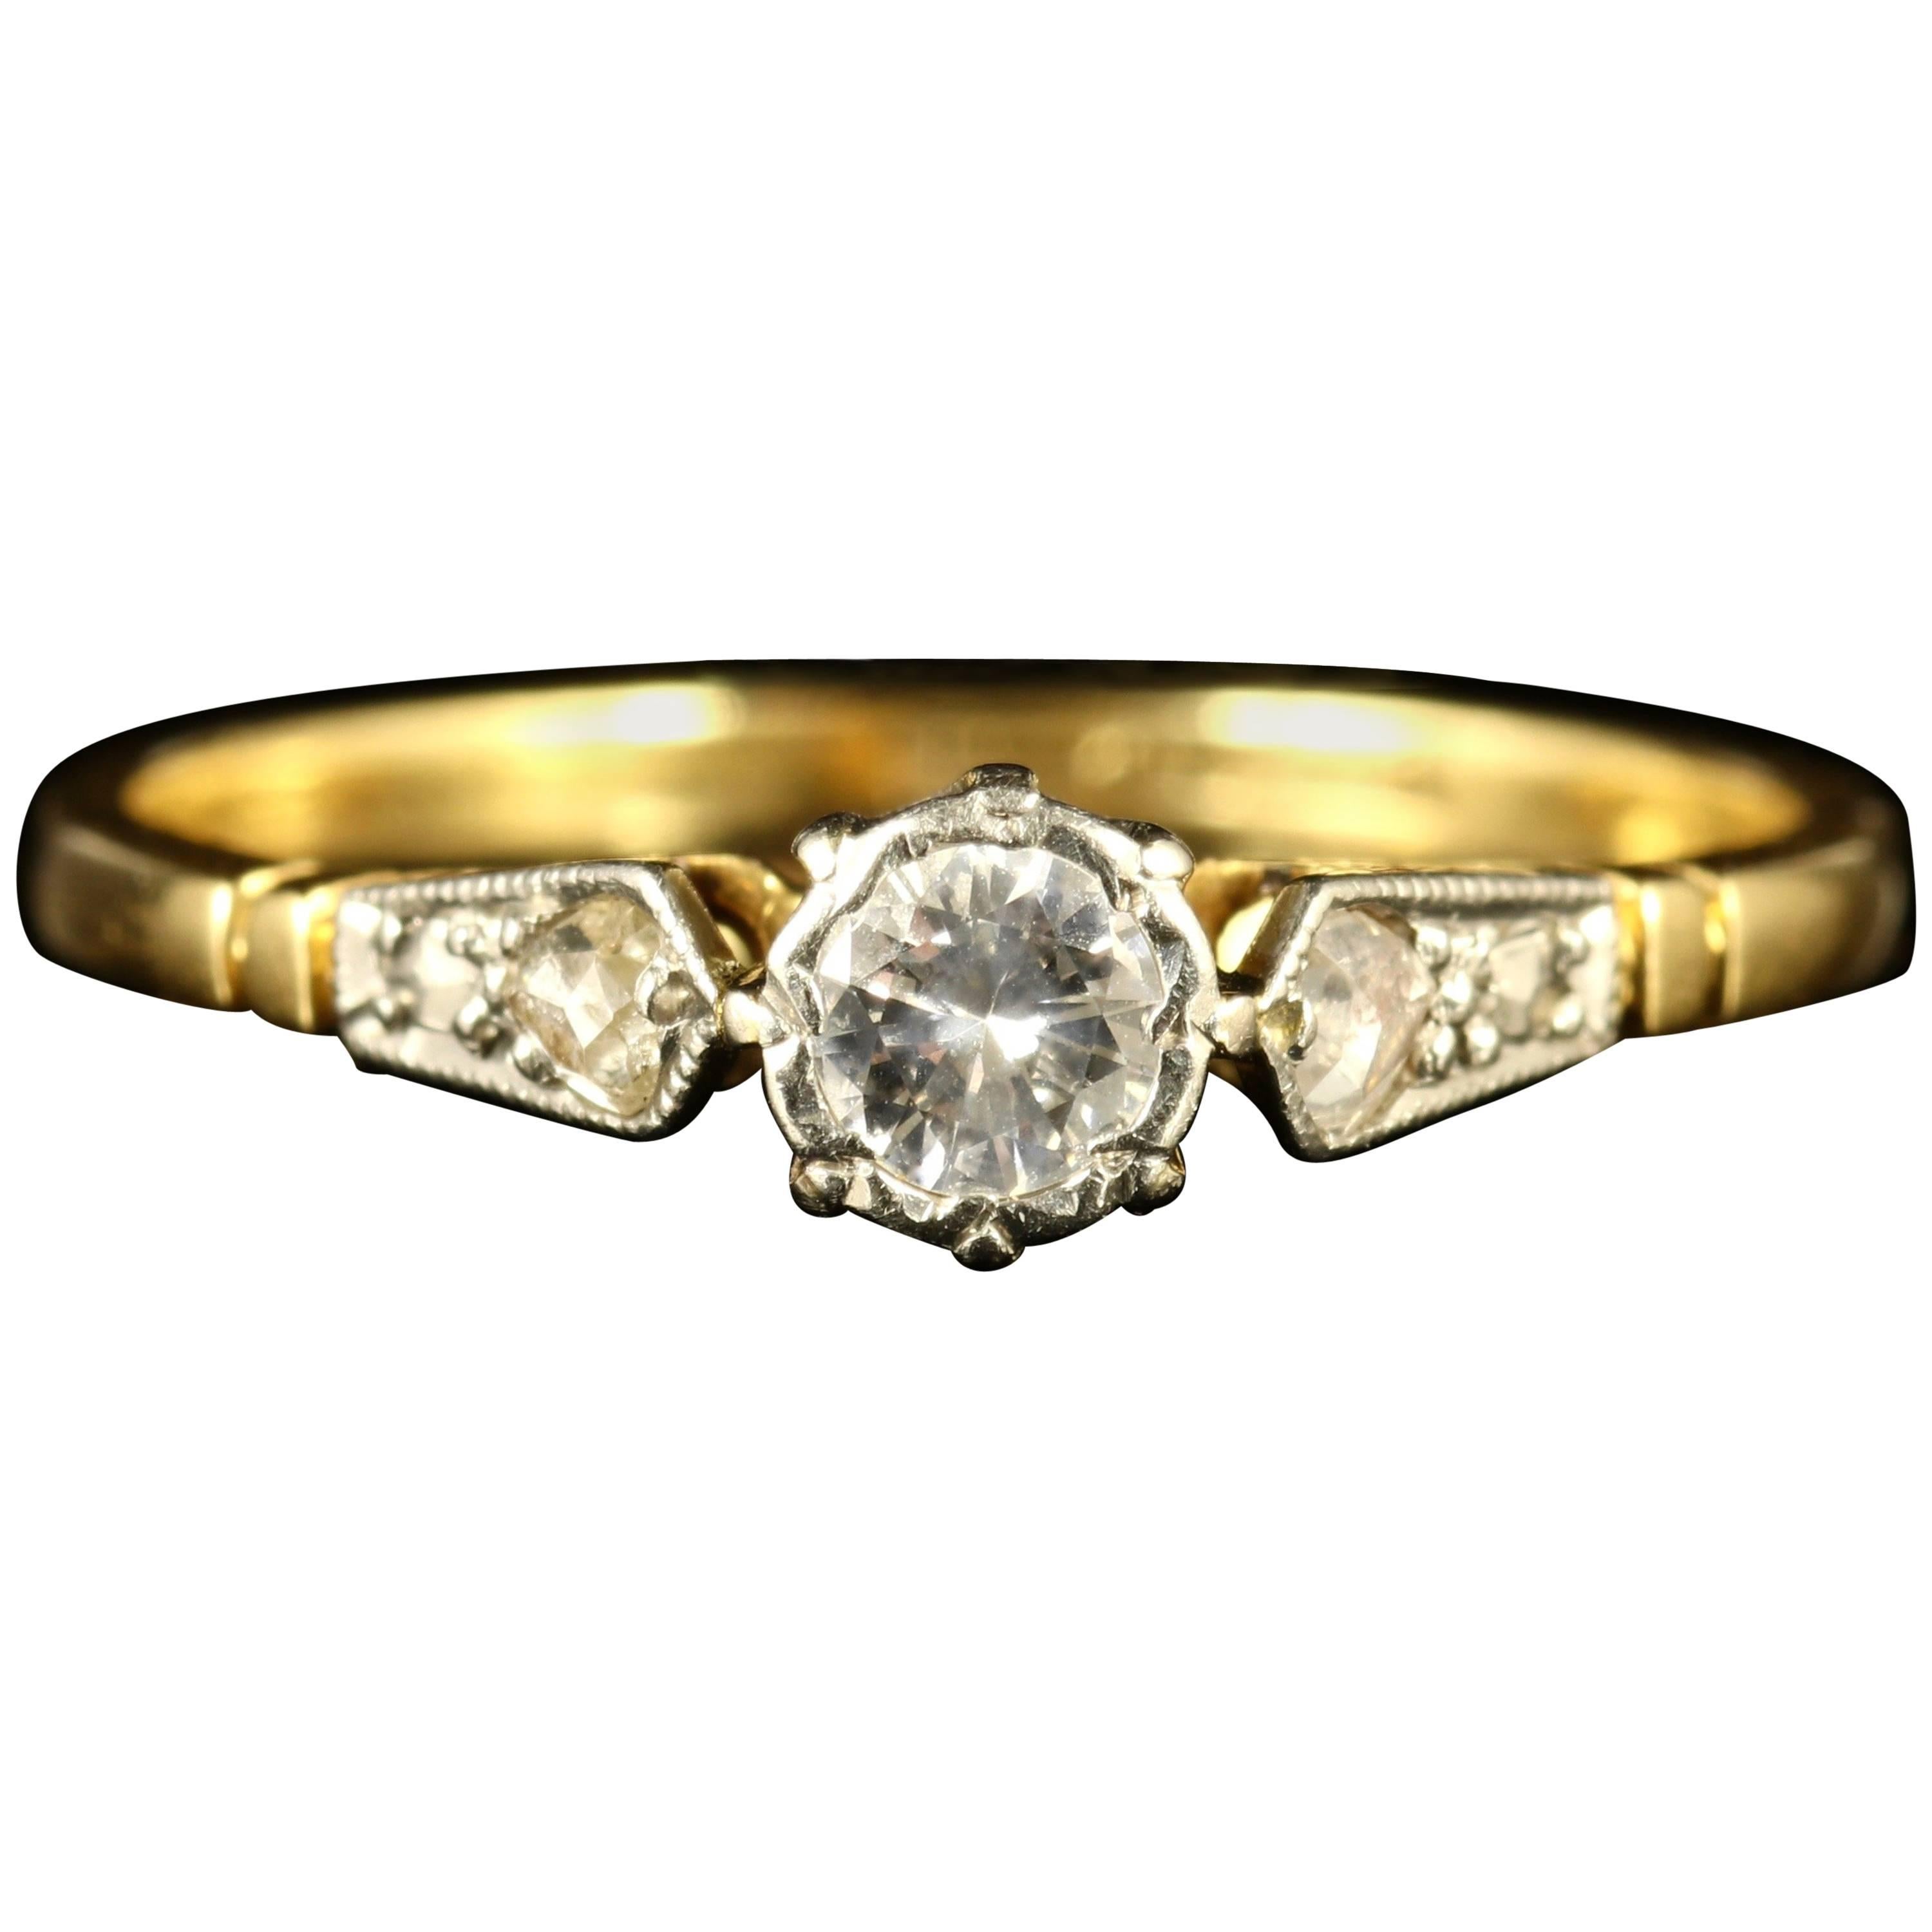 Antique Edwardian Diamond Engagement Ring, circa 1914